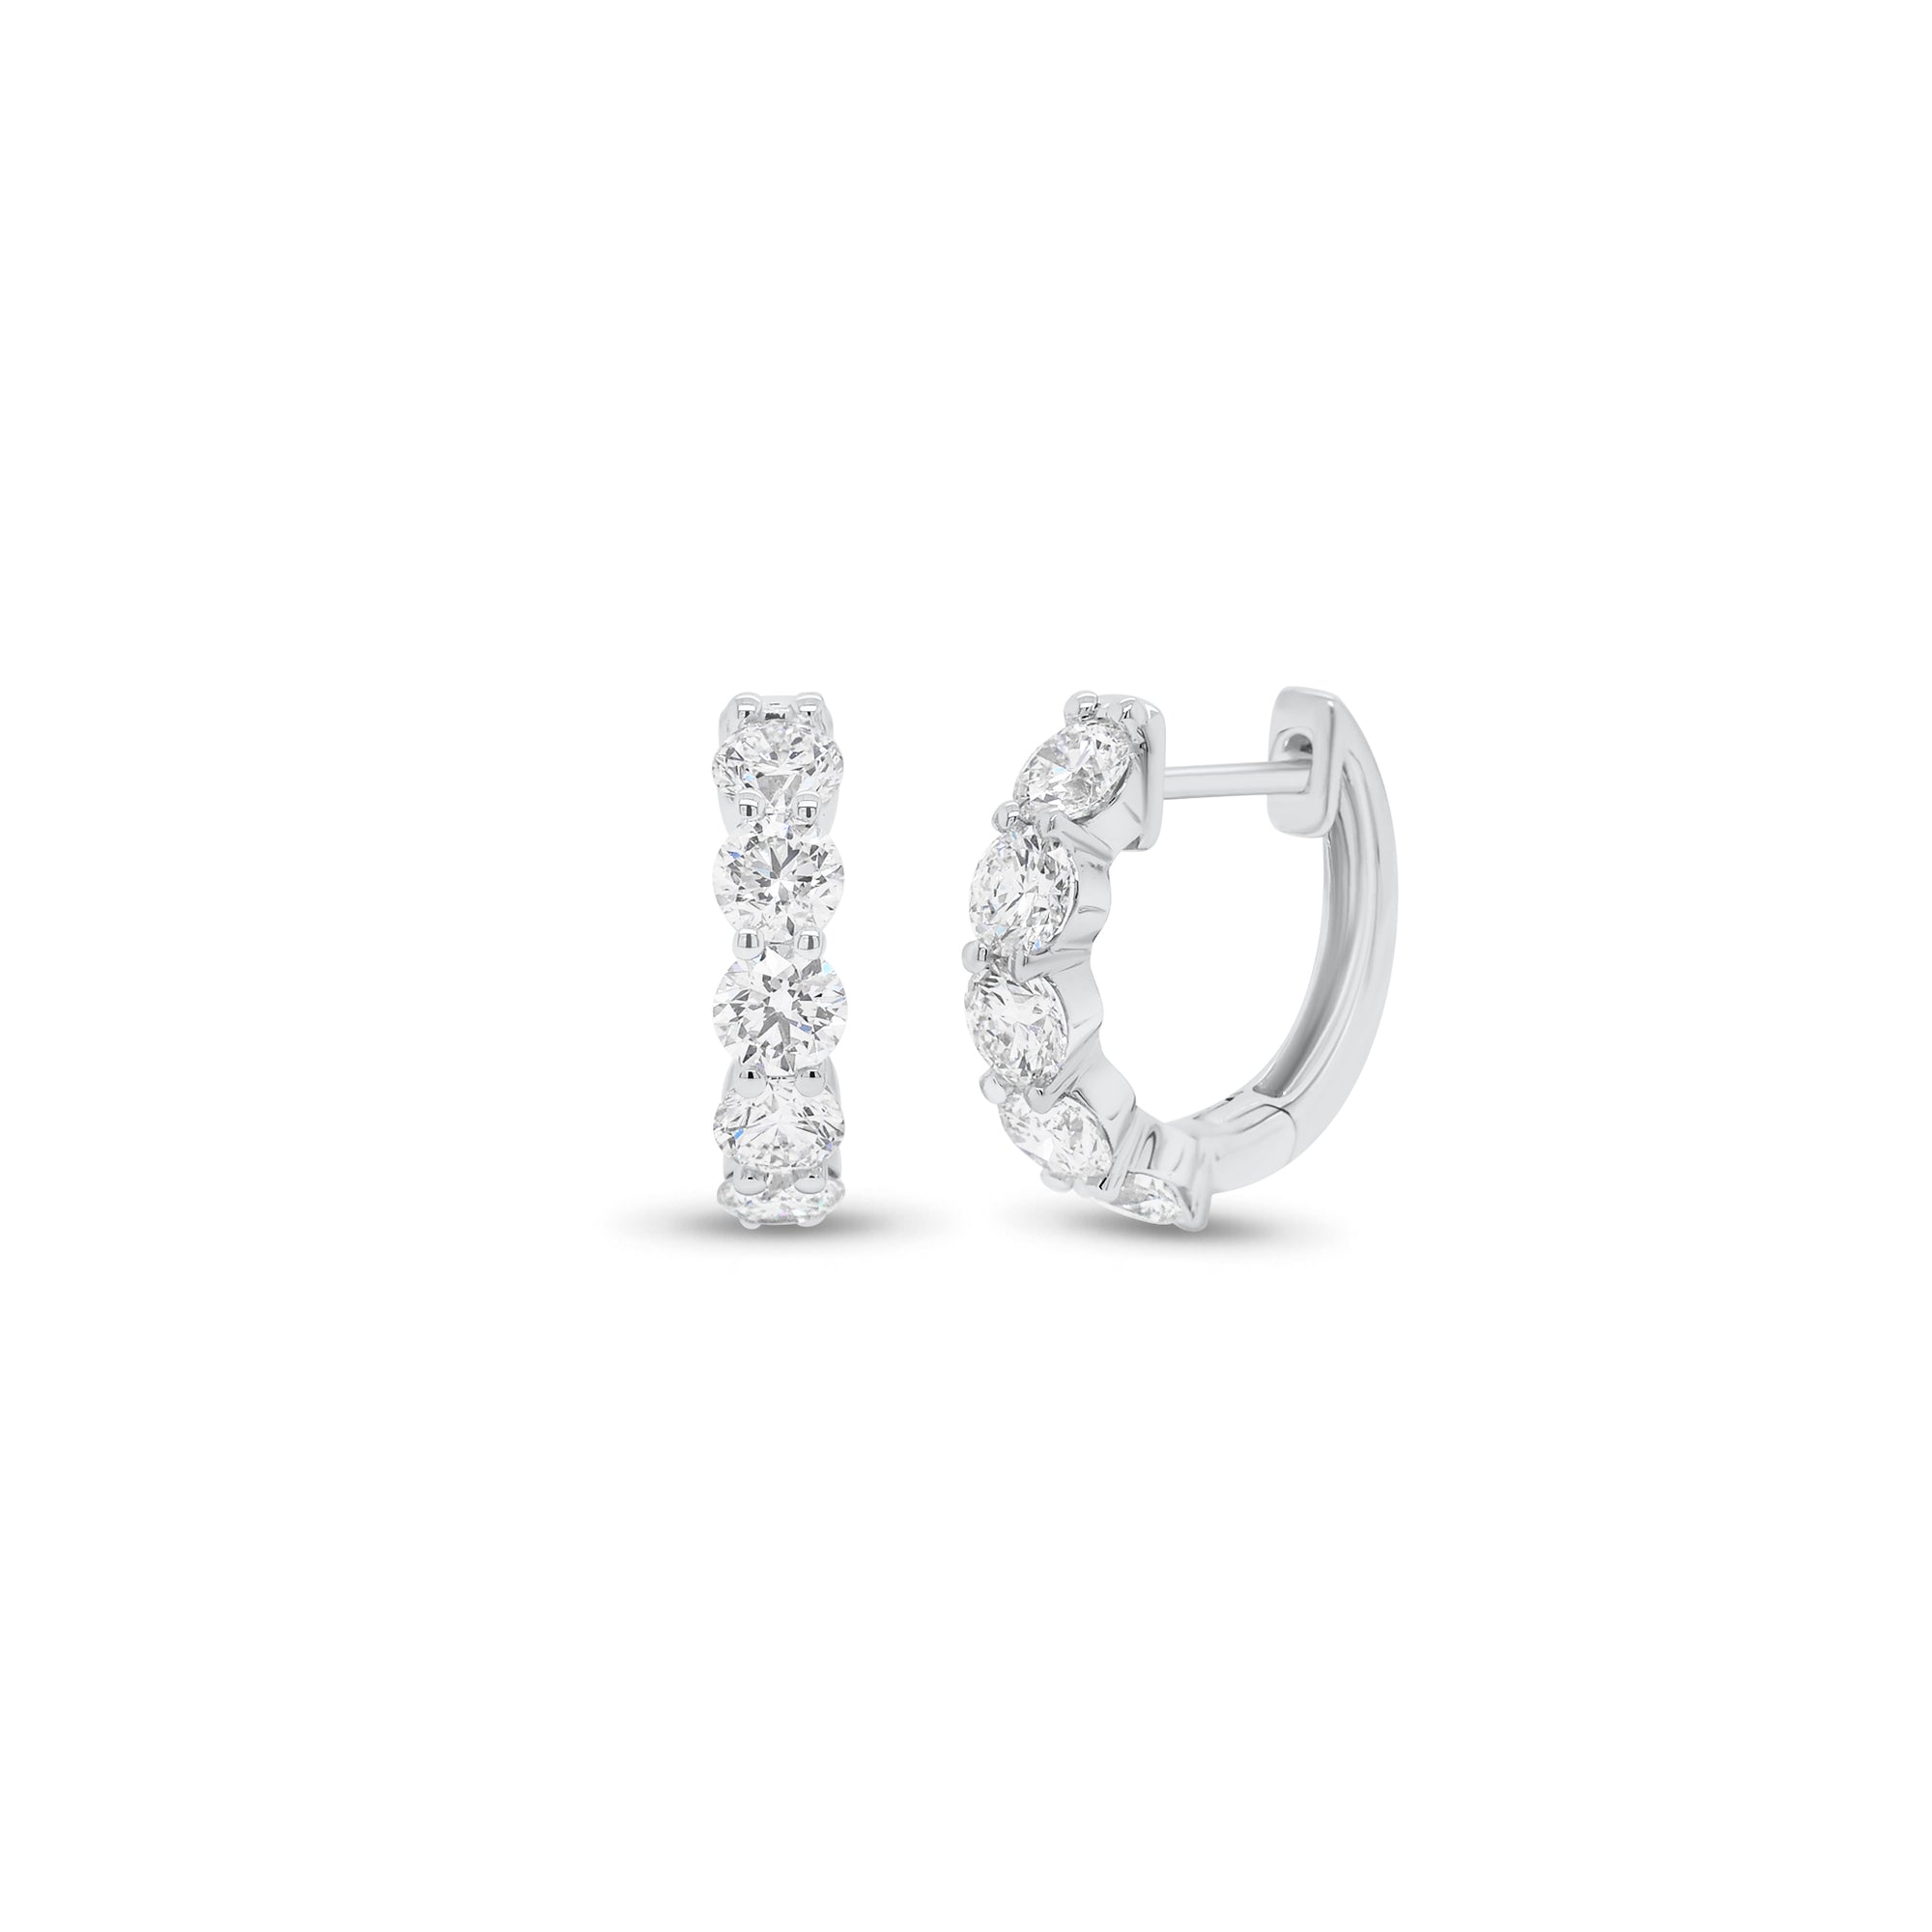 1.58 ct Diamond Huggie Earrings - 18K gold weighing 2.59 grams - 10 round diamonds weighing 1.58 carats